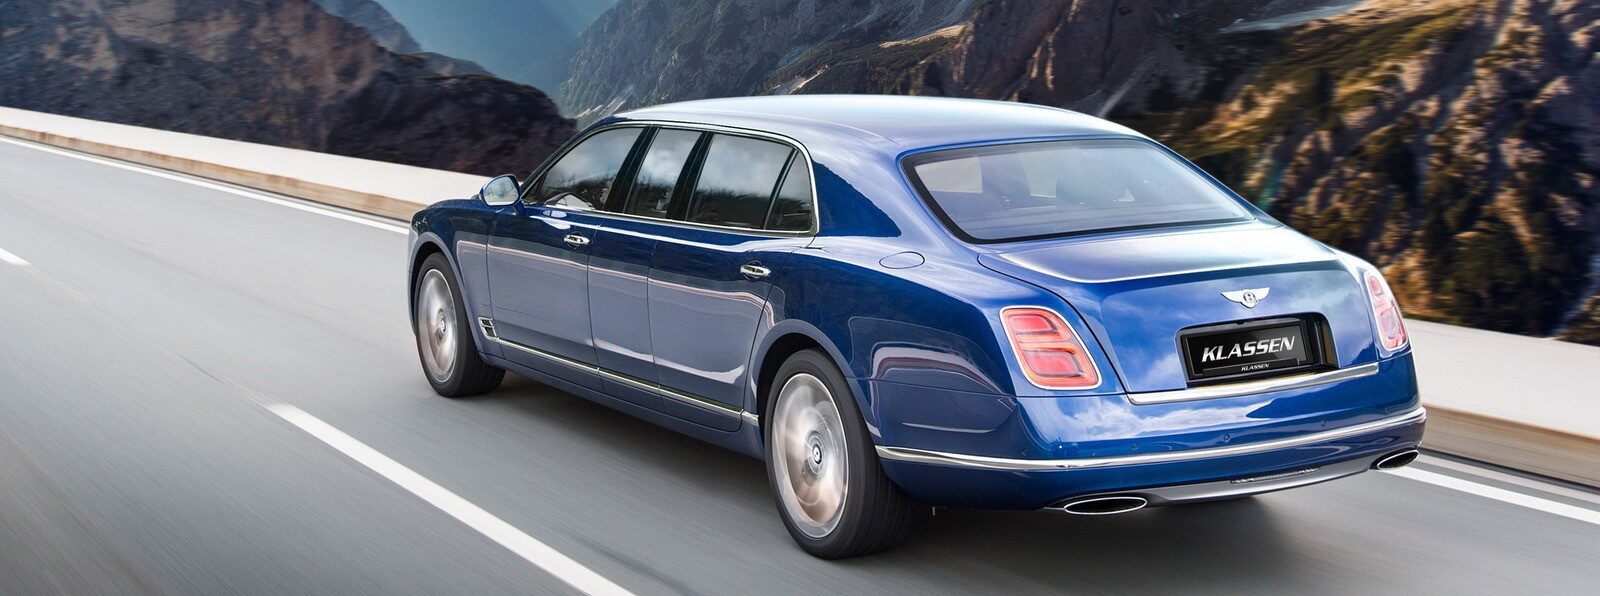 Bentley Mulsanne Limo настоящий соперник Rolls-Royce Phantom